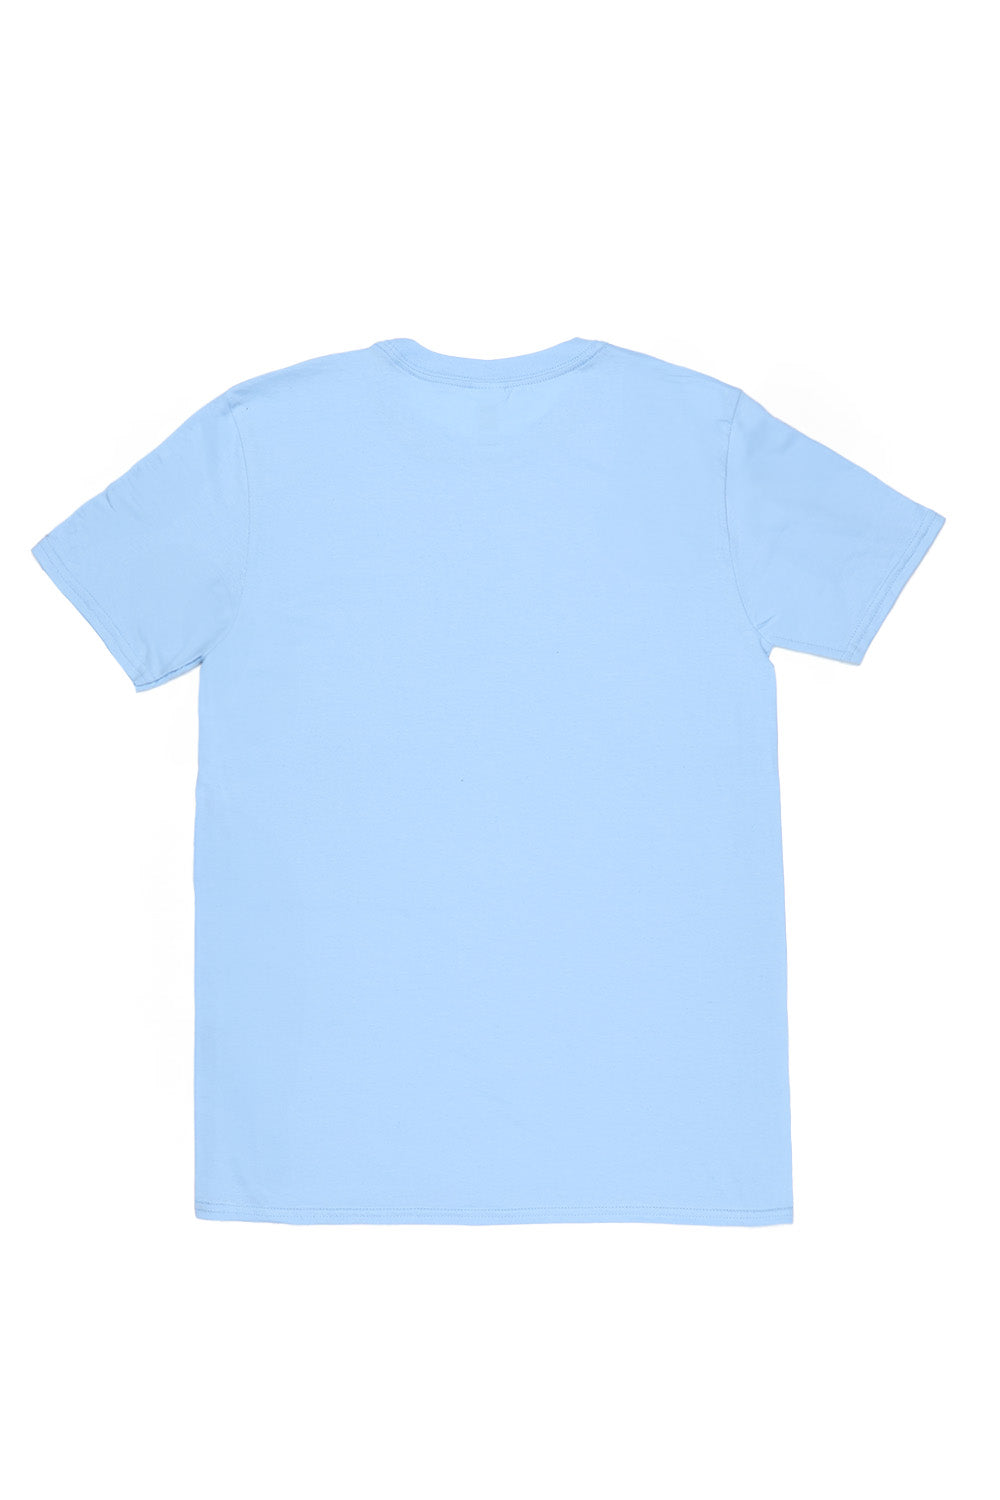 Paris Mon Amour T-Shirt in Light Blue (Custom Packs)